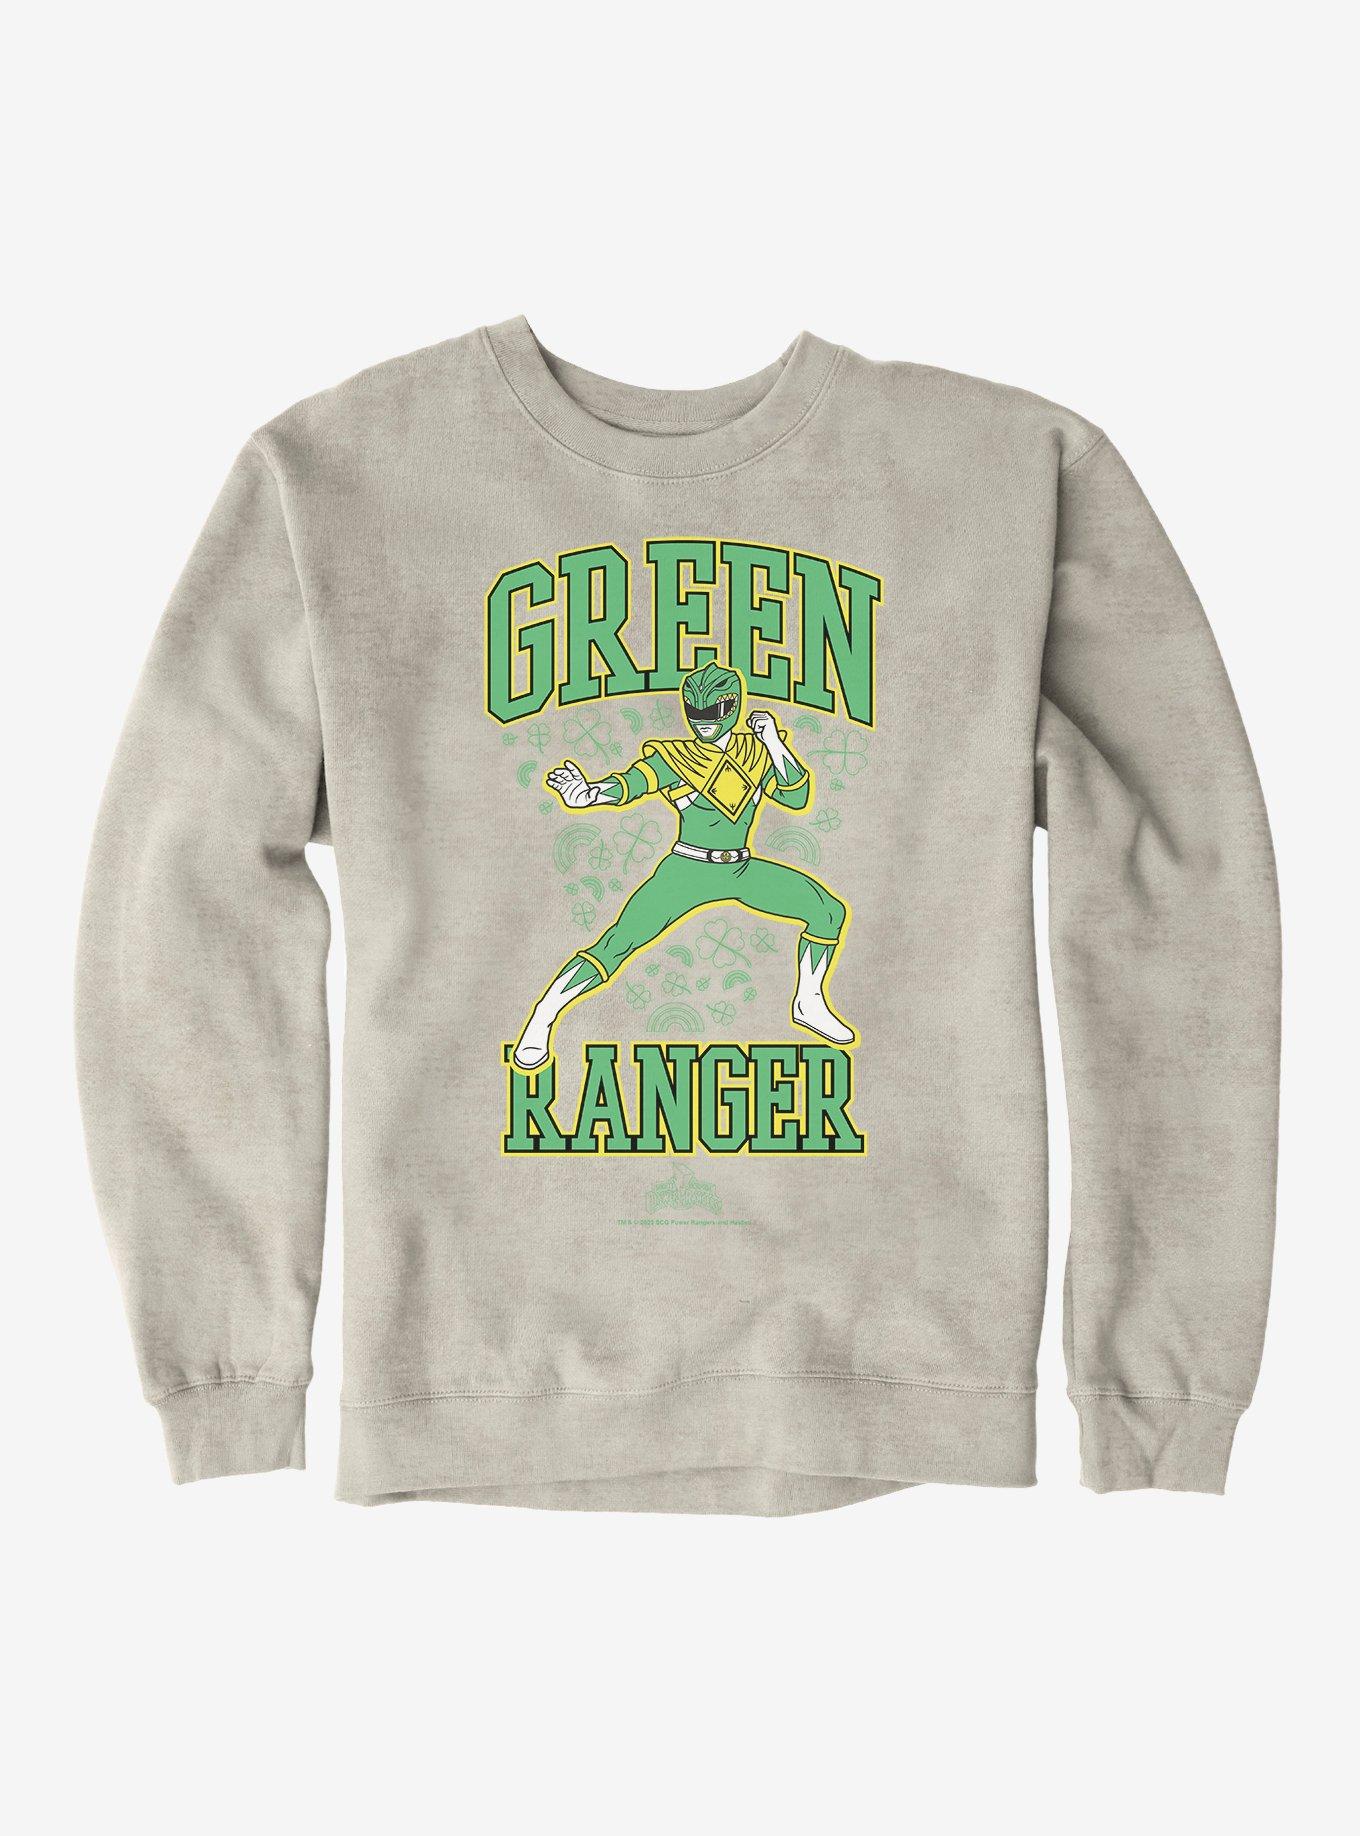 Mighty Morphin Power Rangers Green Ranger Clover Sweatshirt